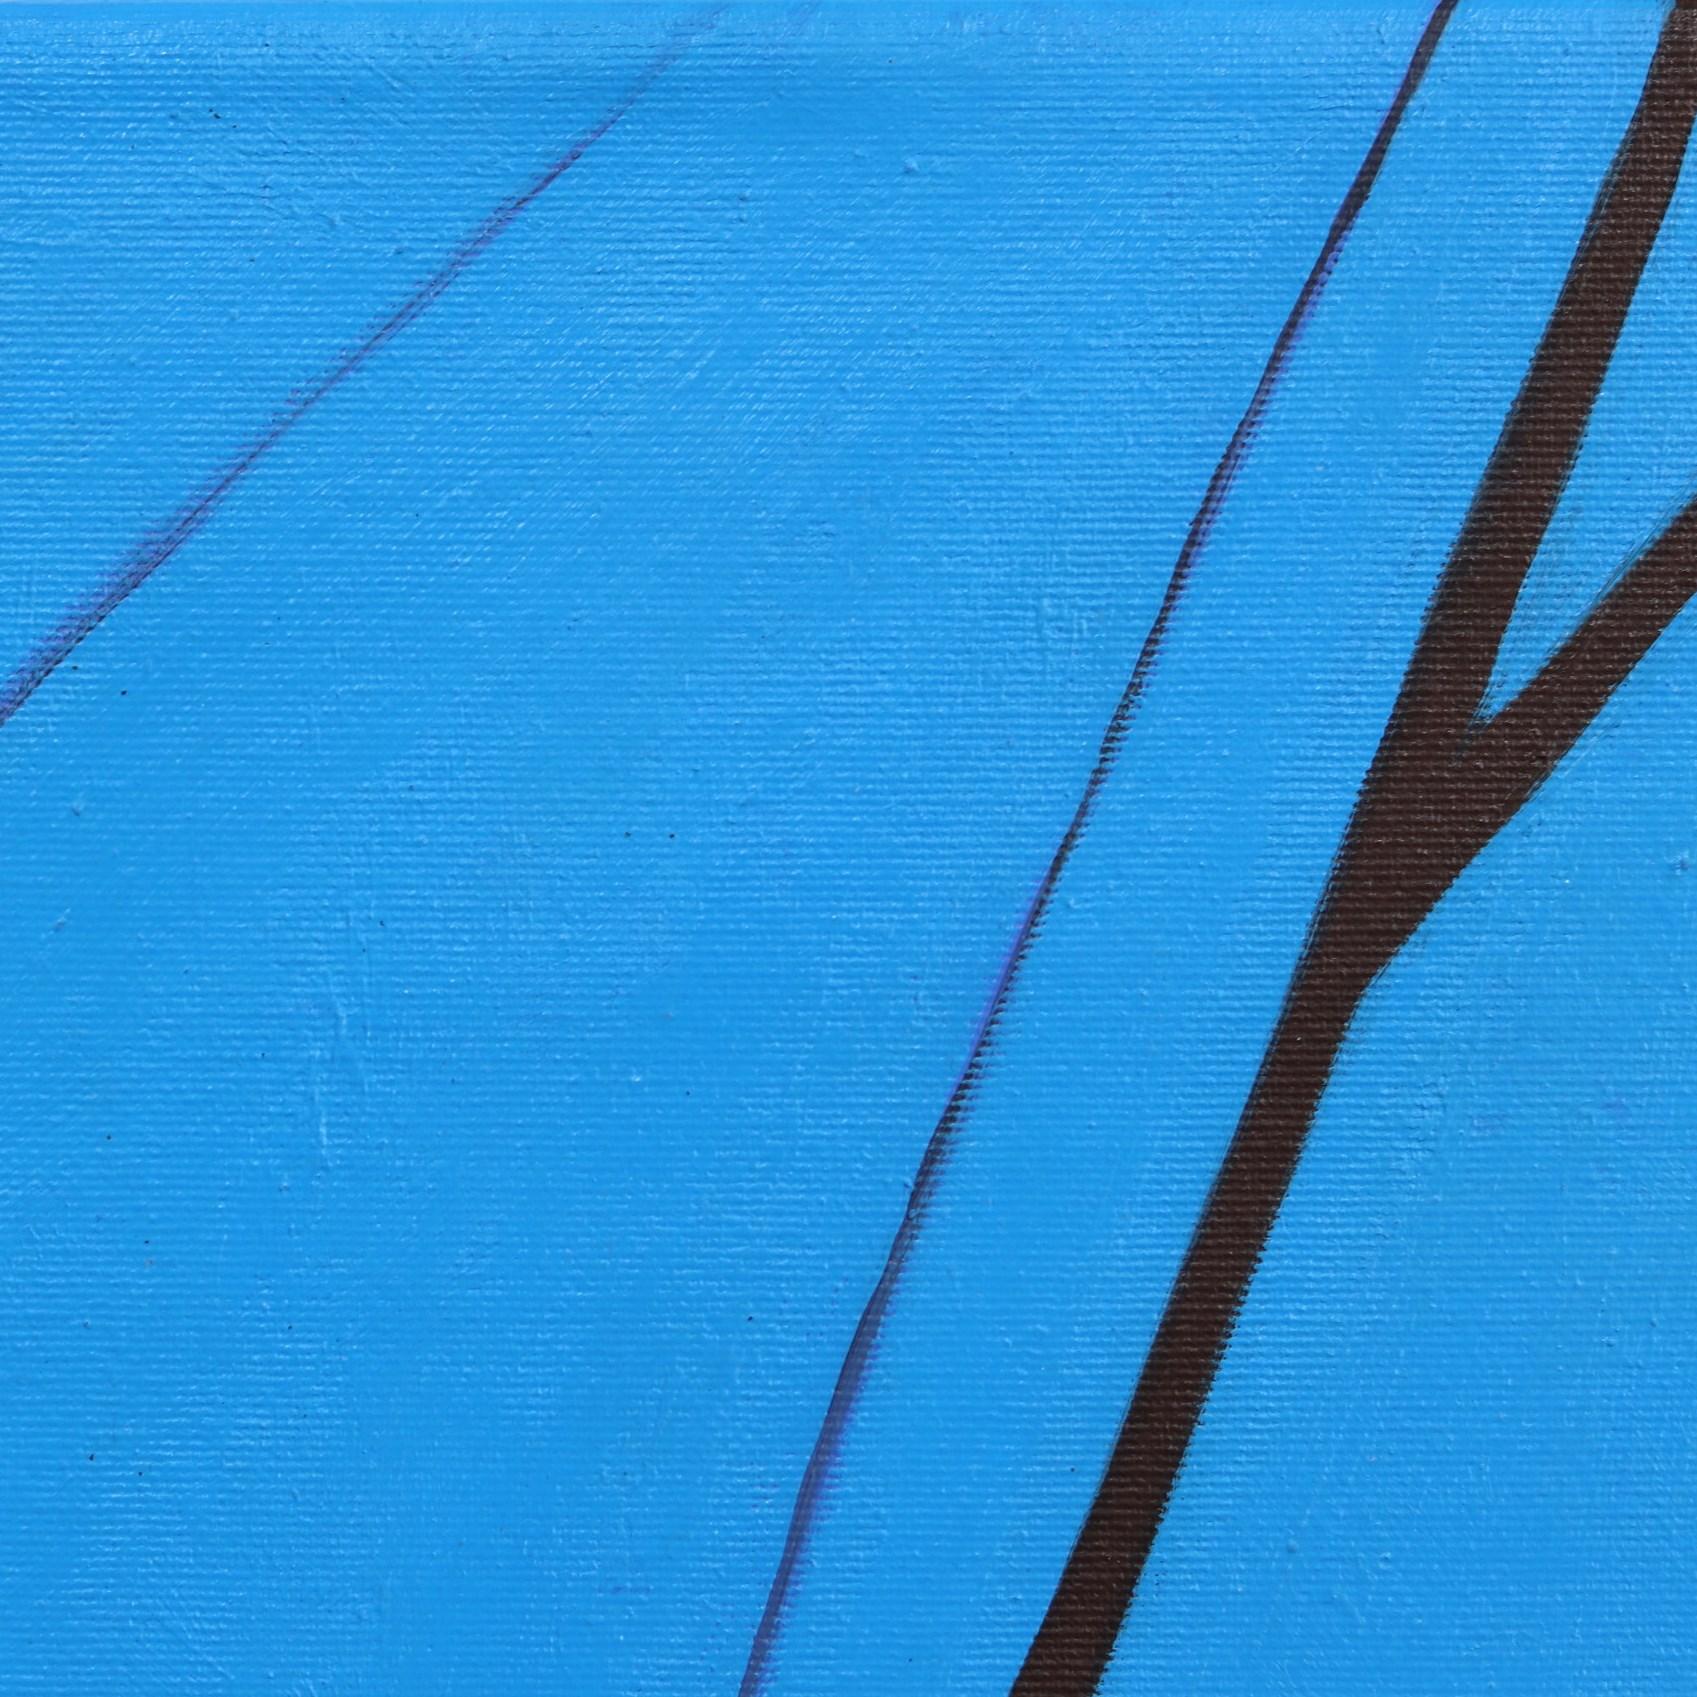 Cyan Blue Umbrella - Pop Art Art by Darwin Estacio Martinez